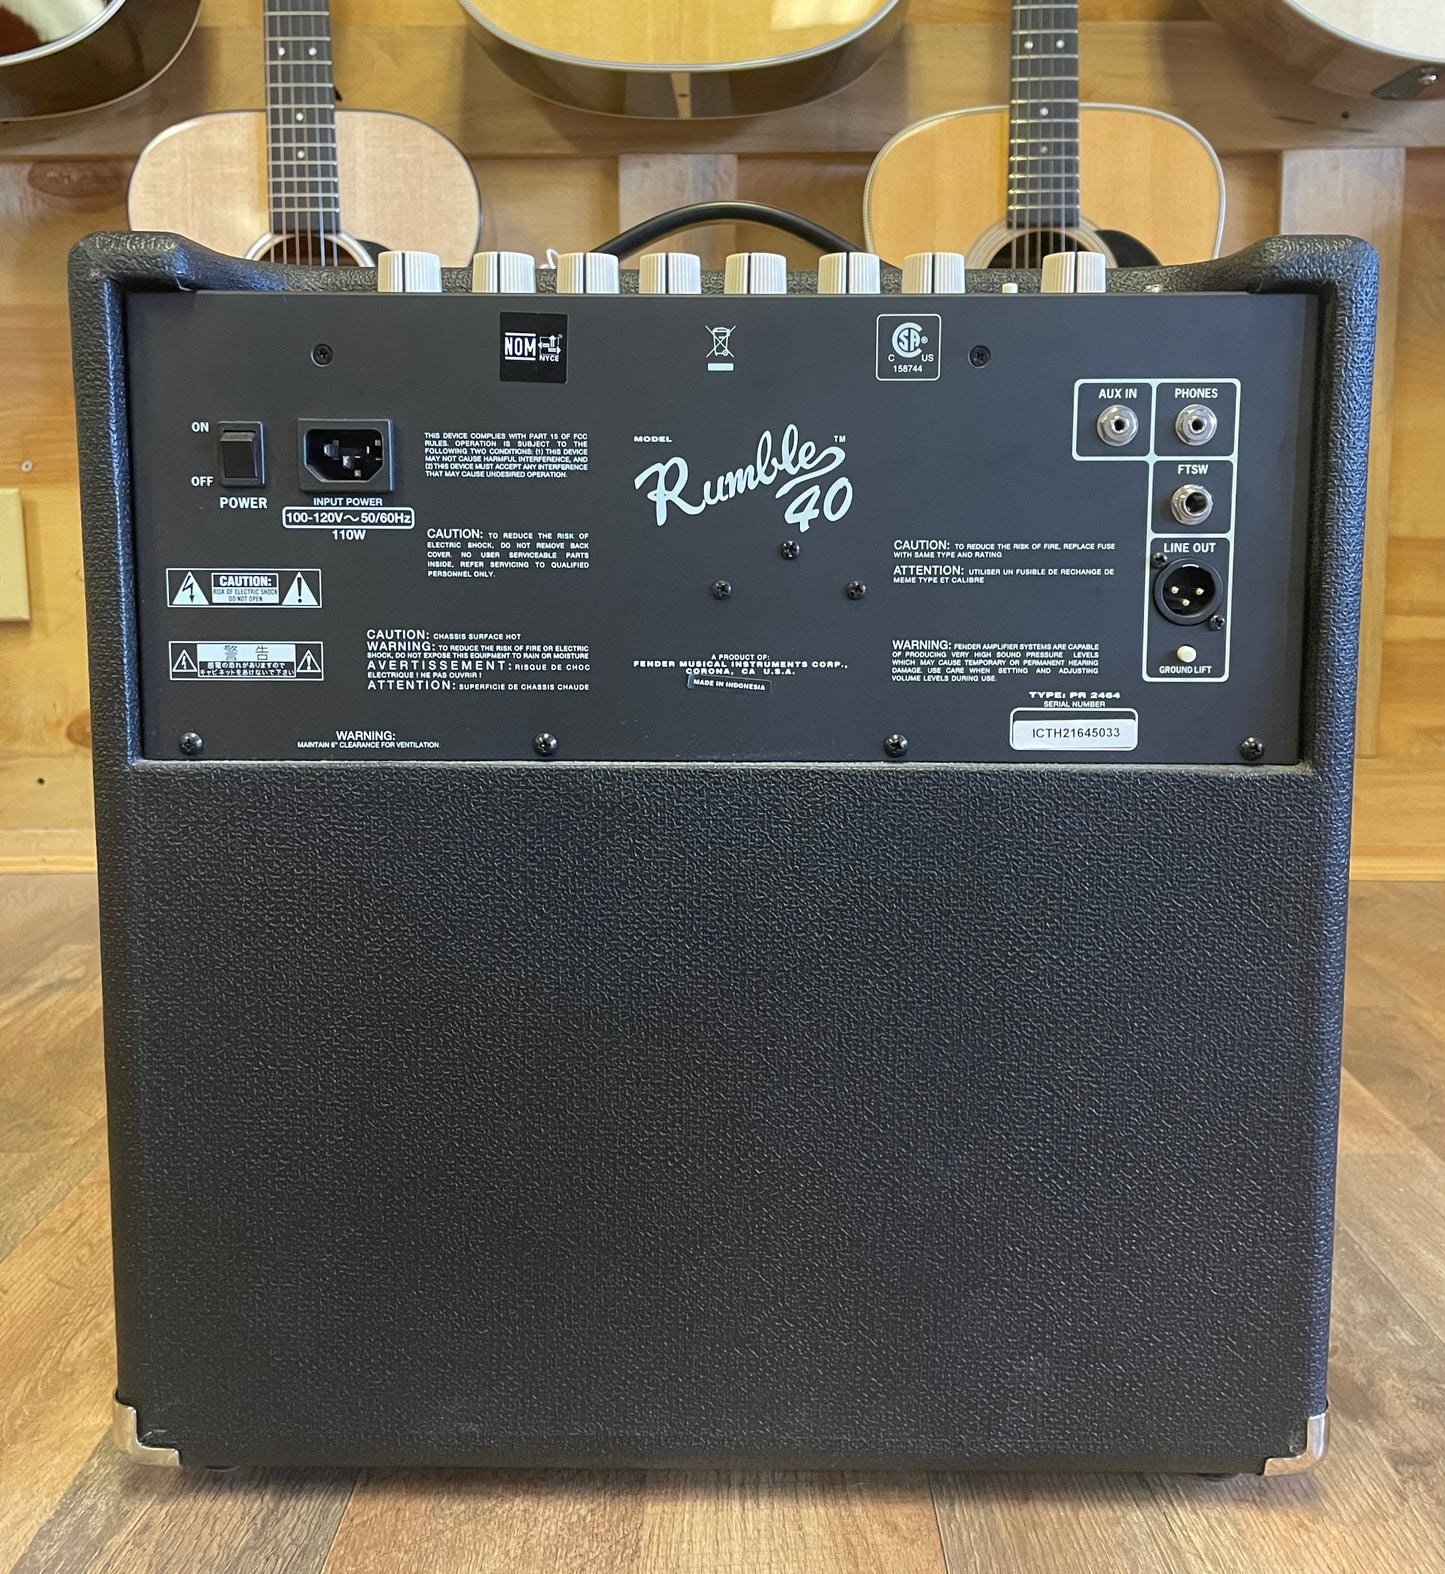 Fender Rumble 40 1x10" 40-watt Bass Combo Amp